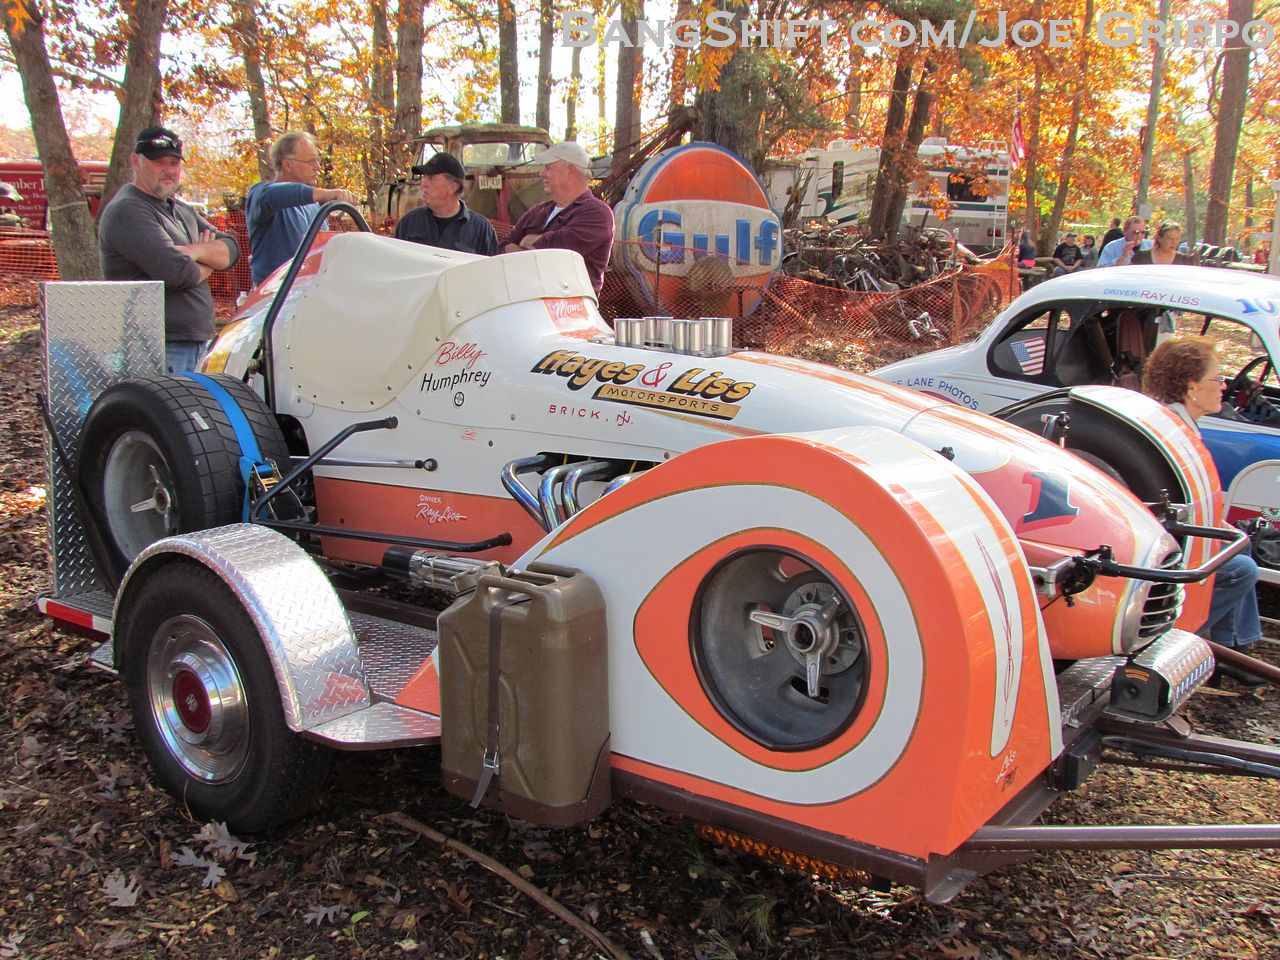 Flemings Junkyard Pumpkin Run 2013 Show Cars And